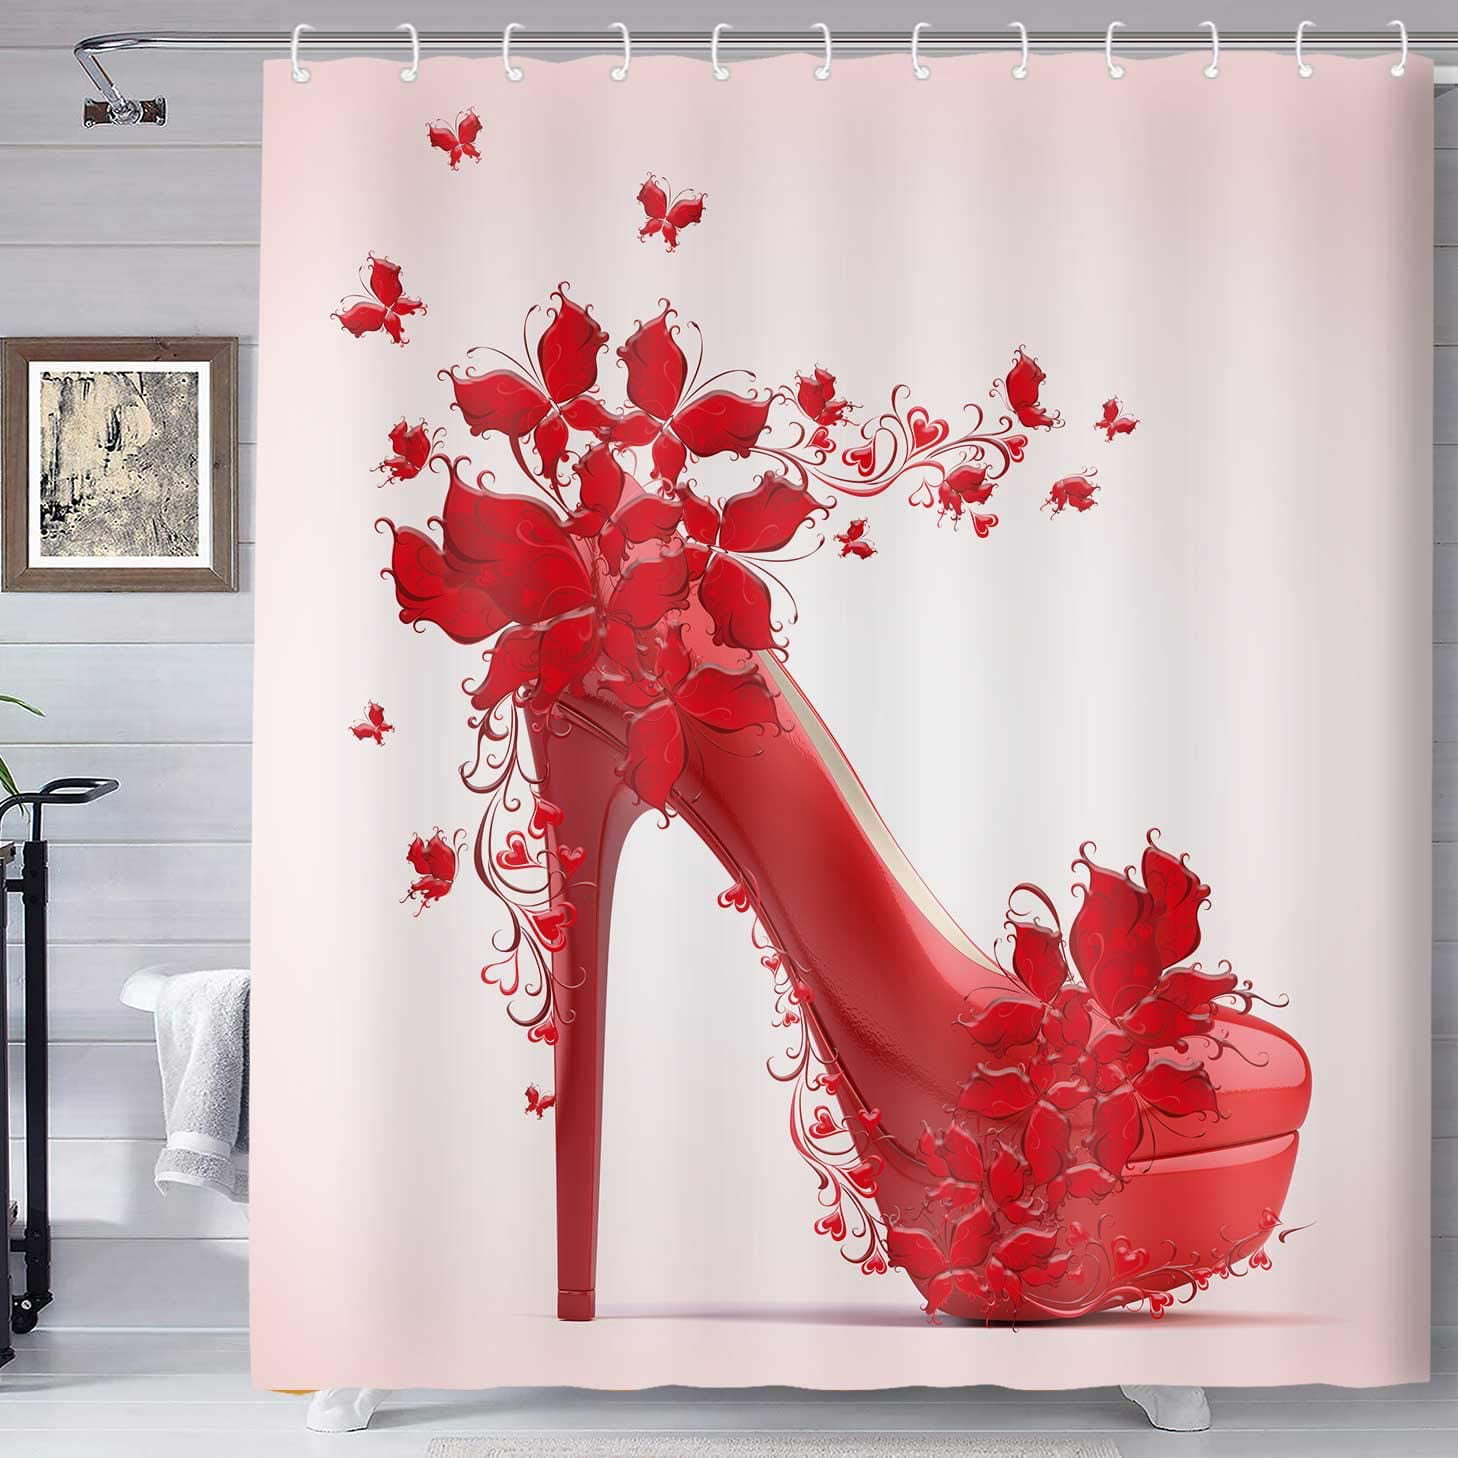 Butterfly high heels Bathroom Decor Shower Curtain Waterproof Fabric w/12 Hooks 